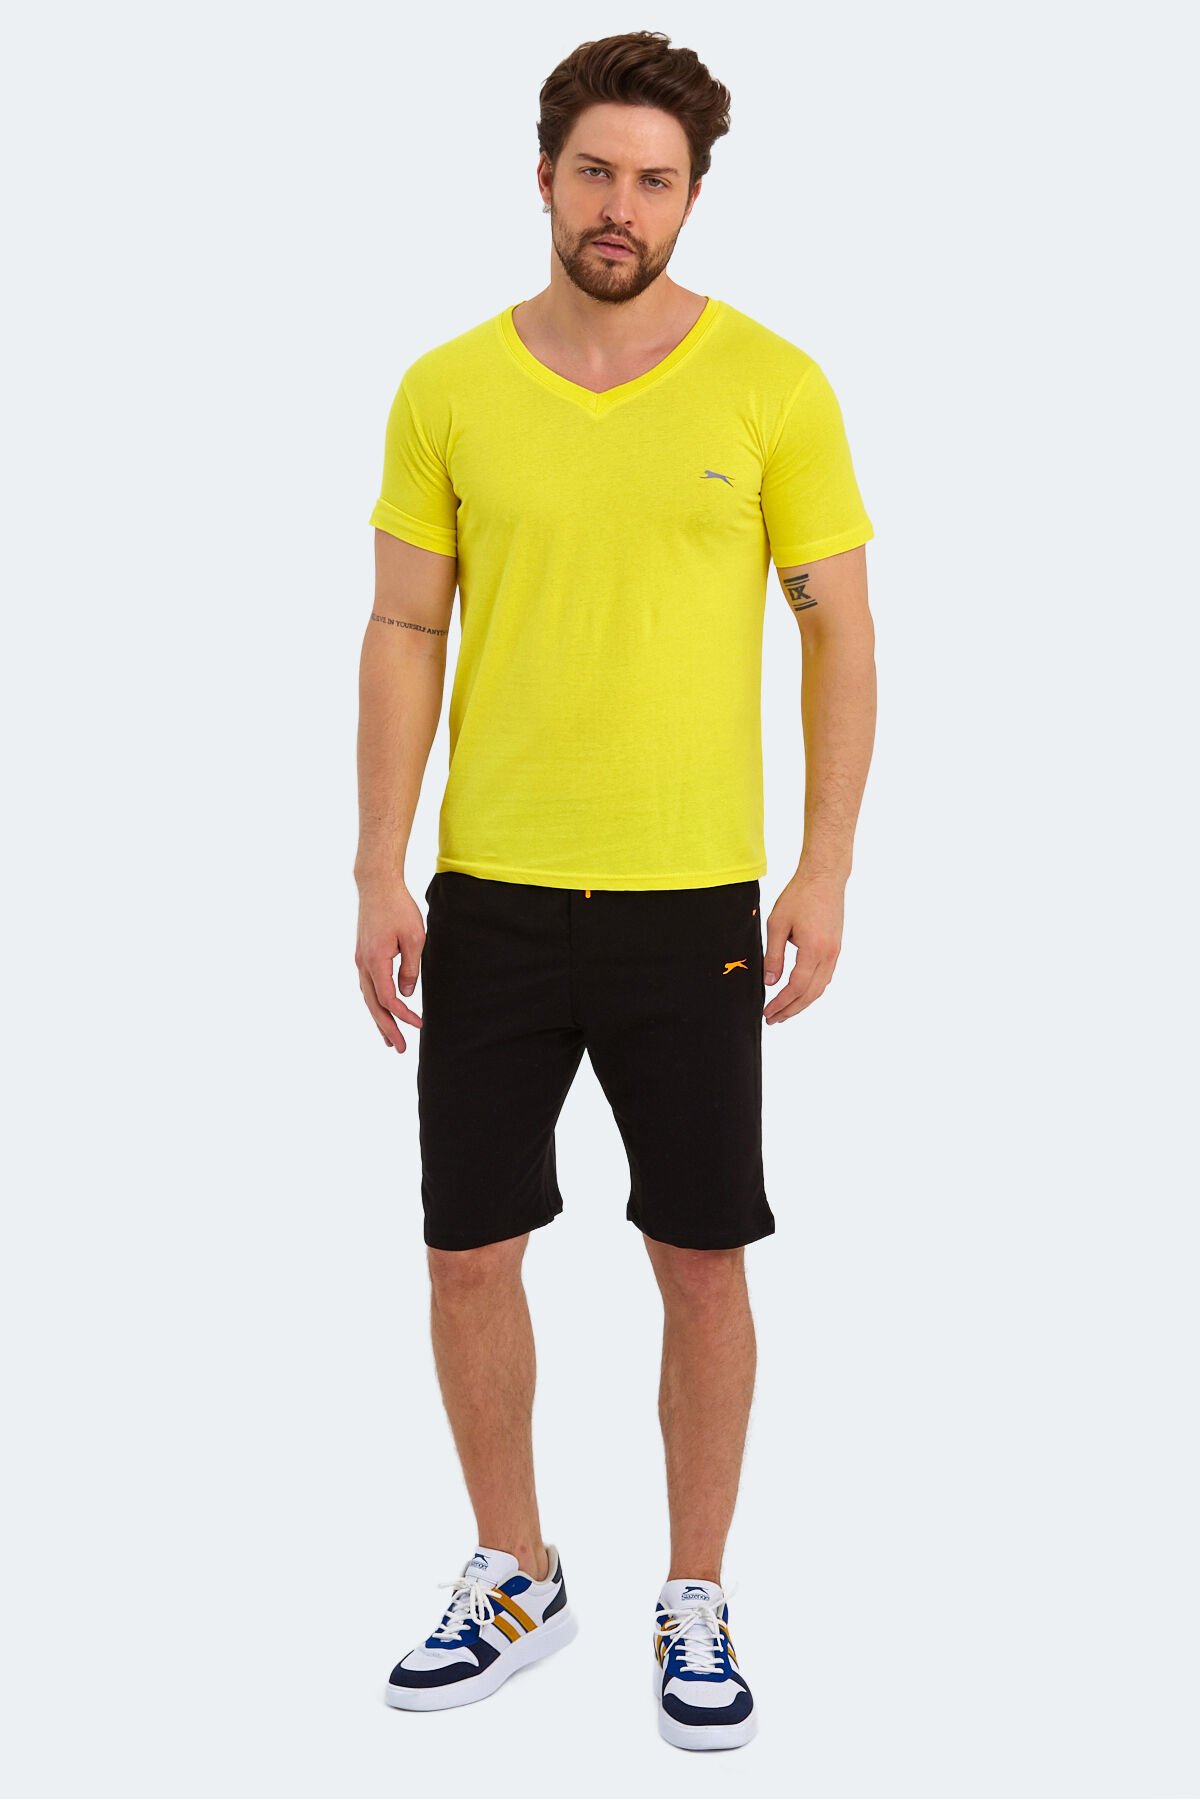 SARGON KTN Erkek Kısa Kollu T-Shirt Açık Sarı - Thumbnail